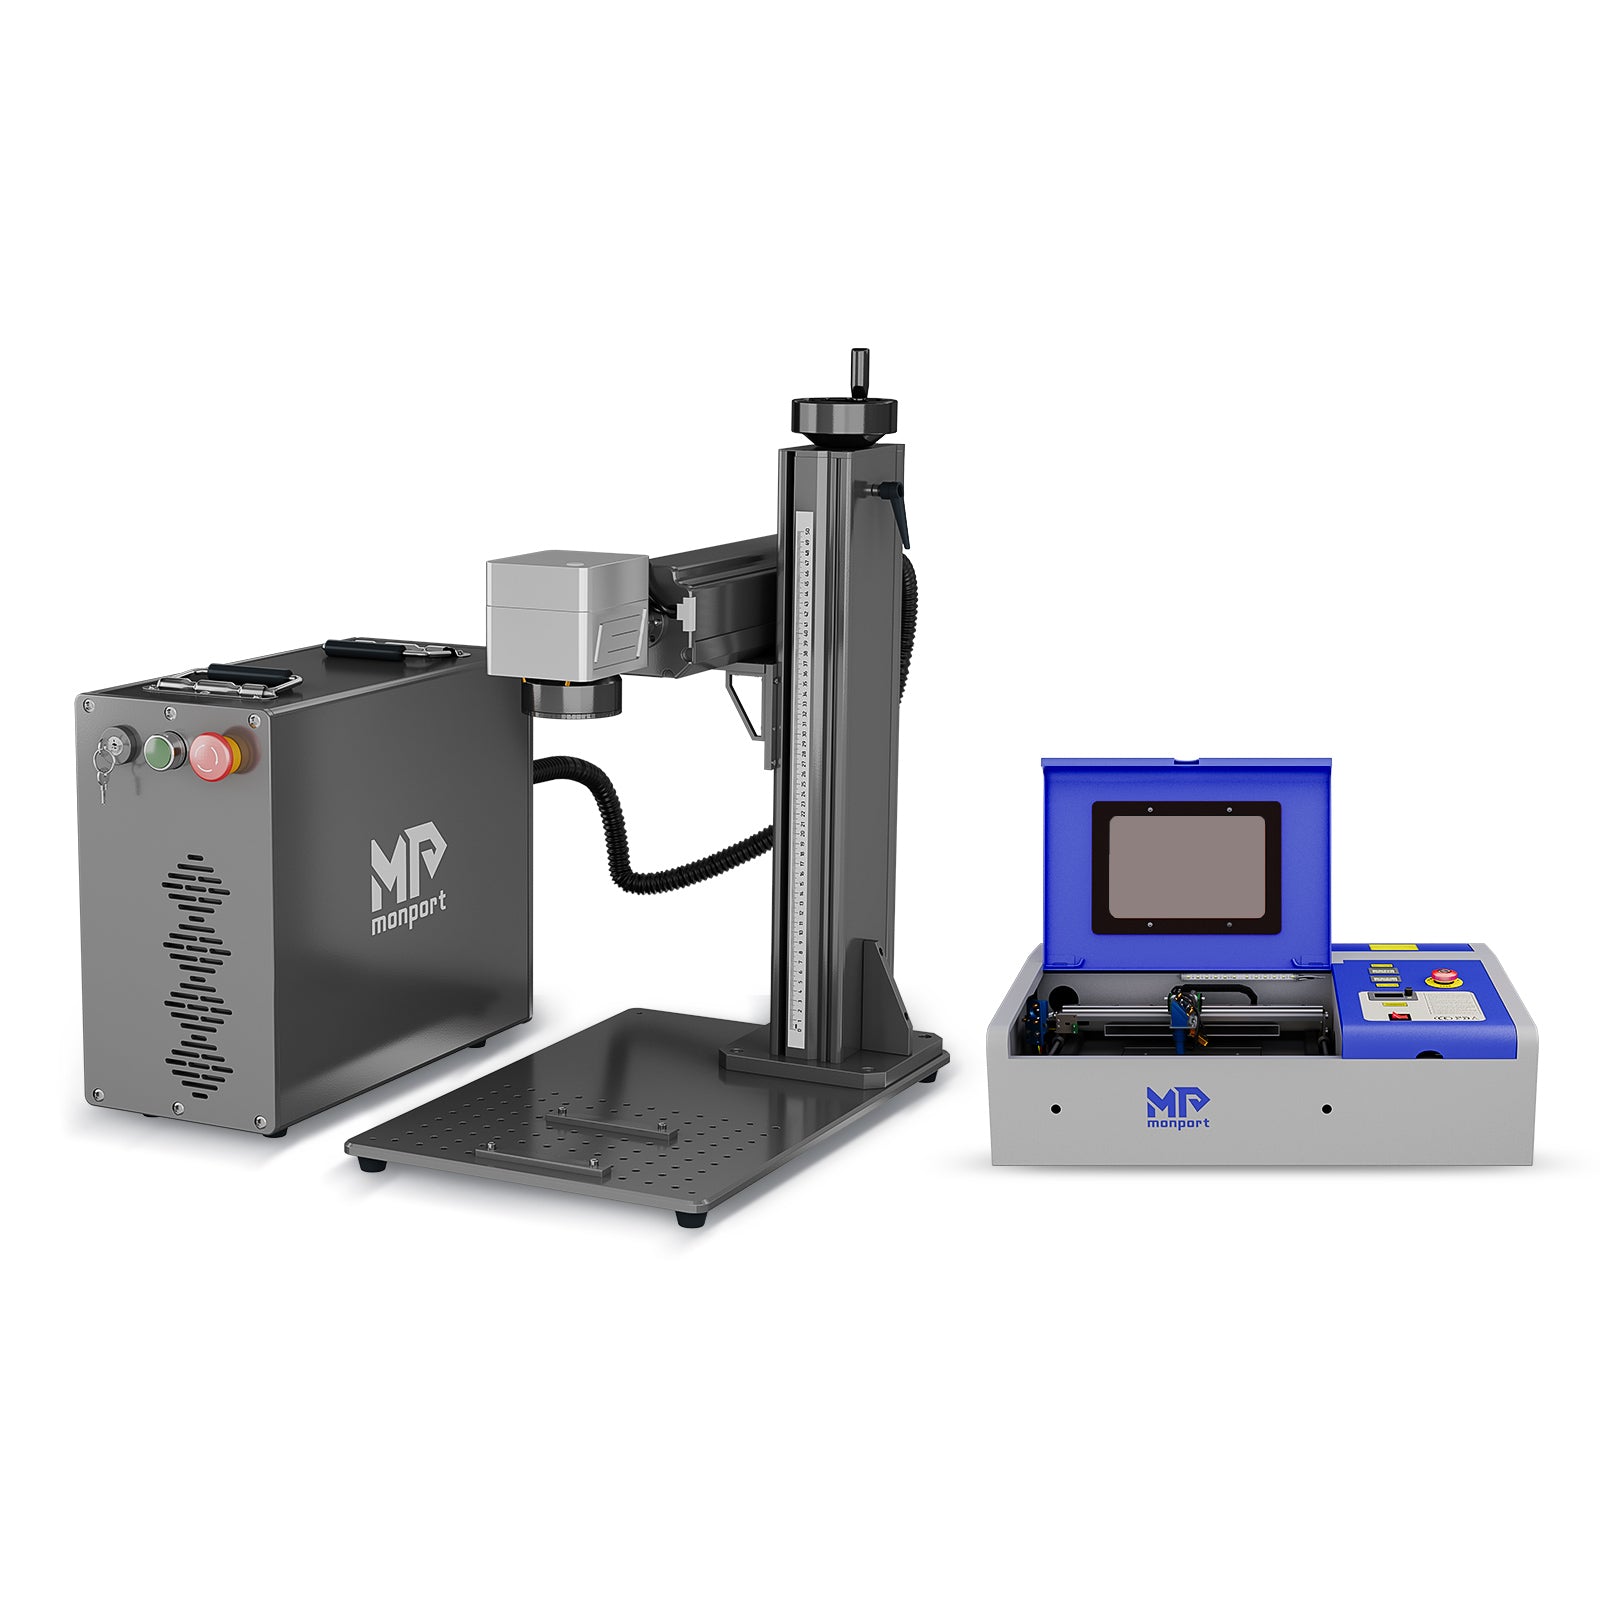 Monport GPro 60W Split MOPA Fiber Laser Engraver & Marking Machine With Manual Focus